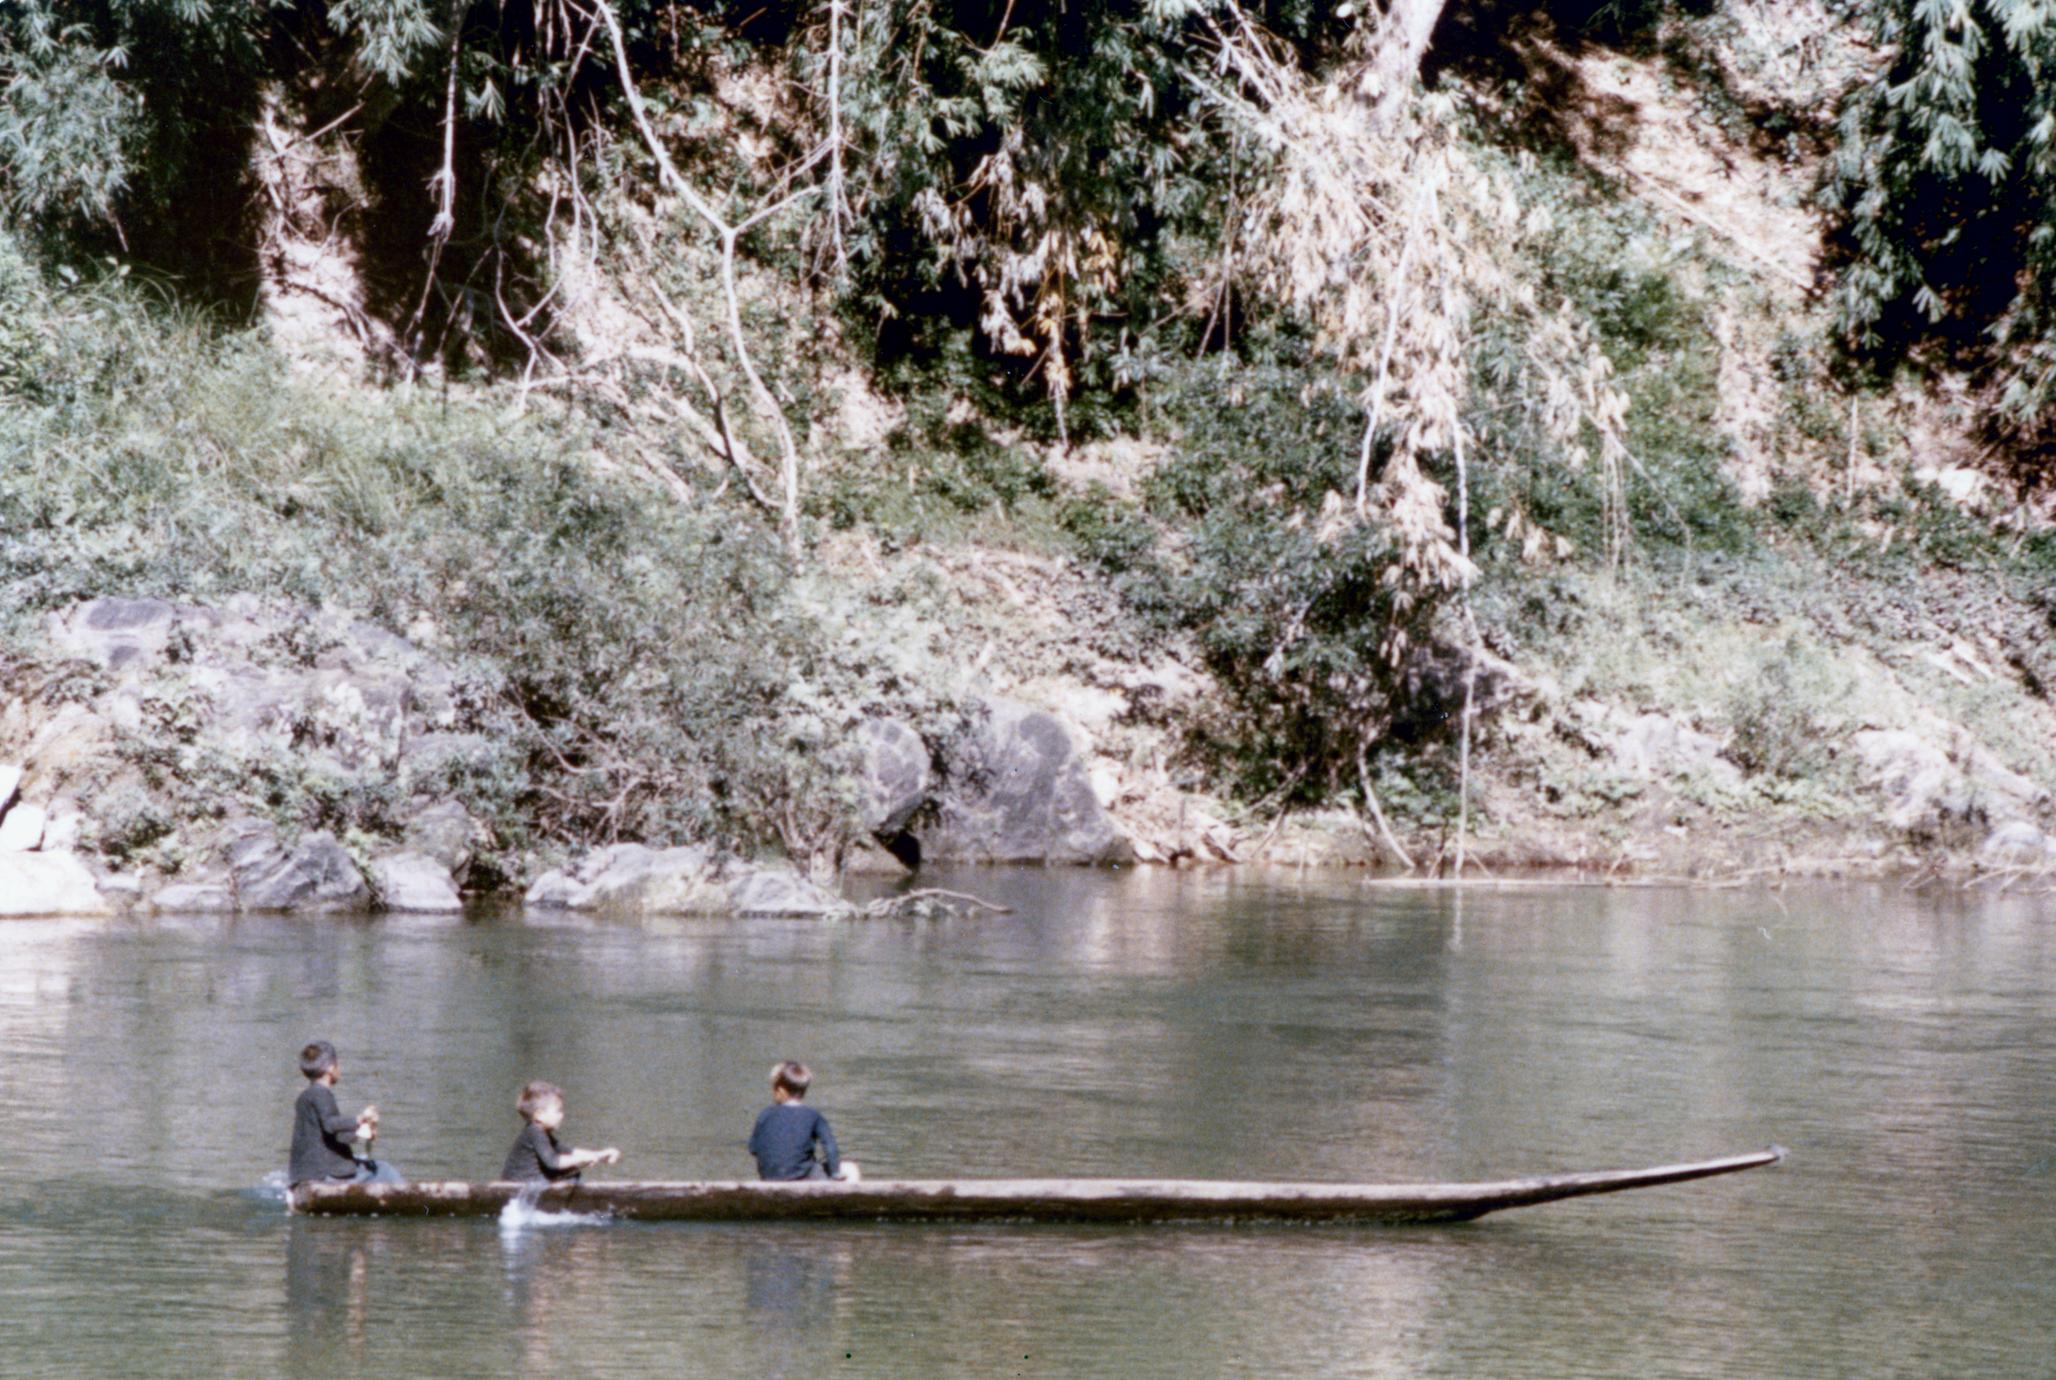 Hmong boys paddling a canoe on a river in Houa Khong Province